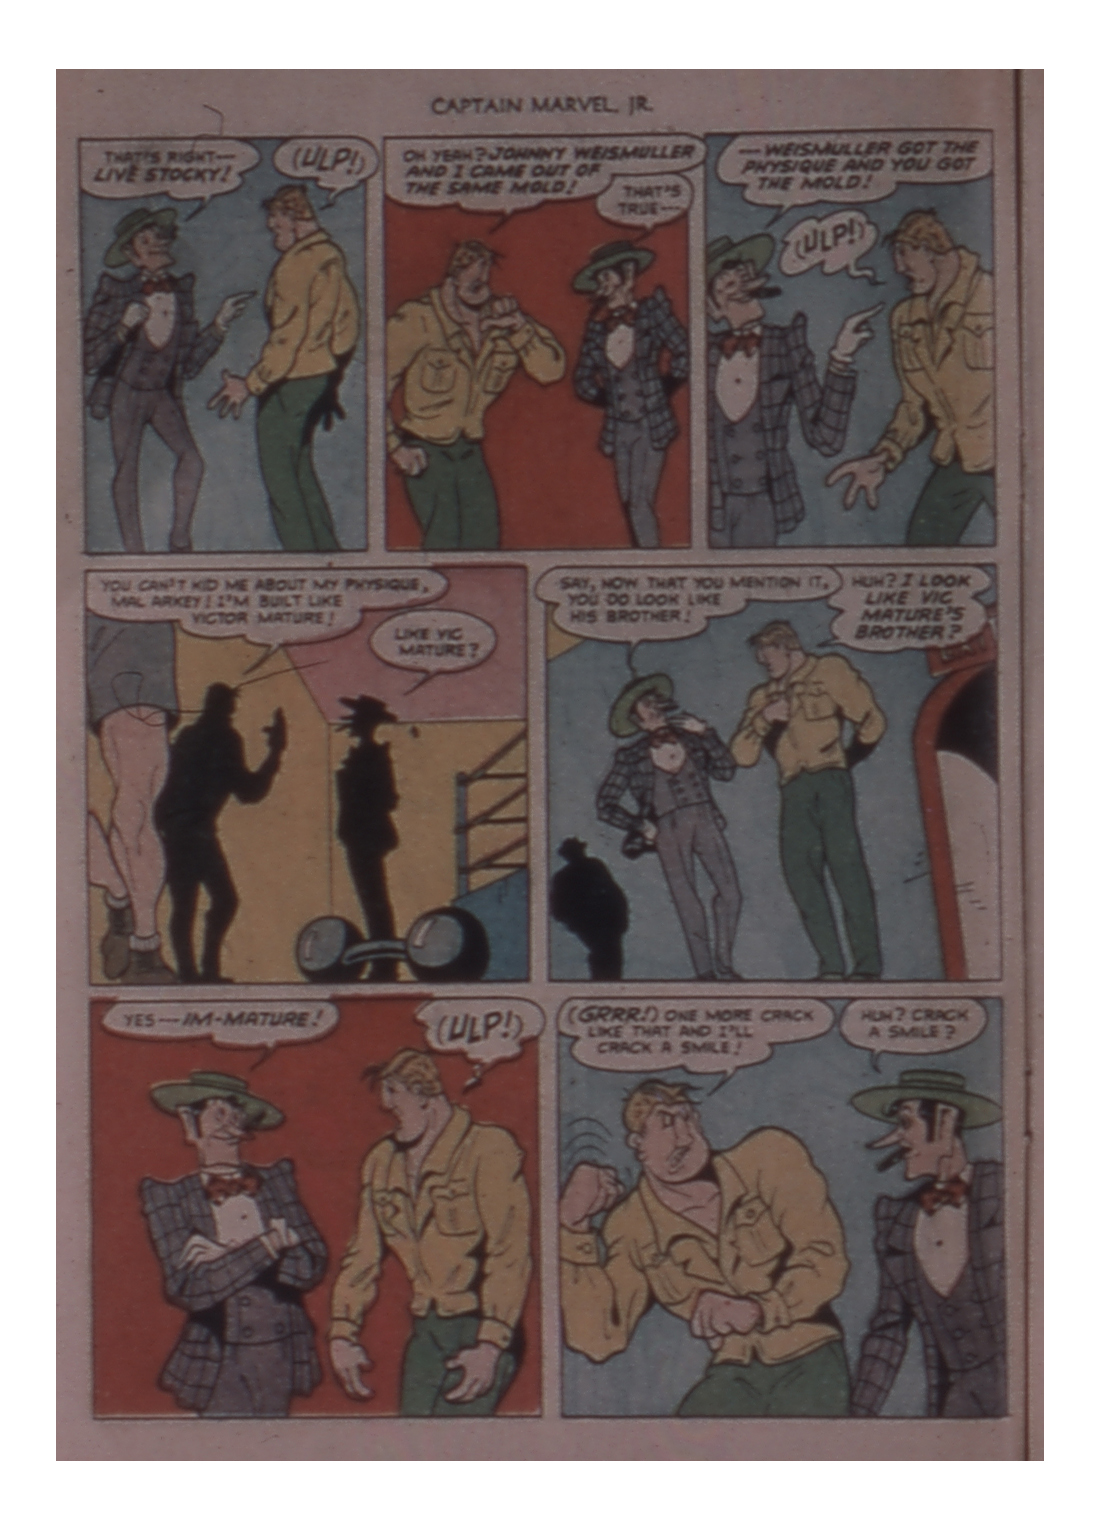 Read online Captain Marvel, Jr. comic -  Issue #114 - 16